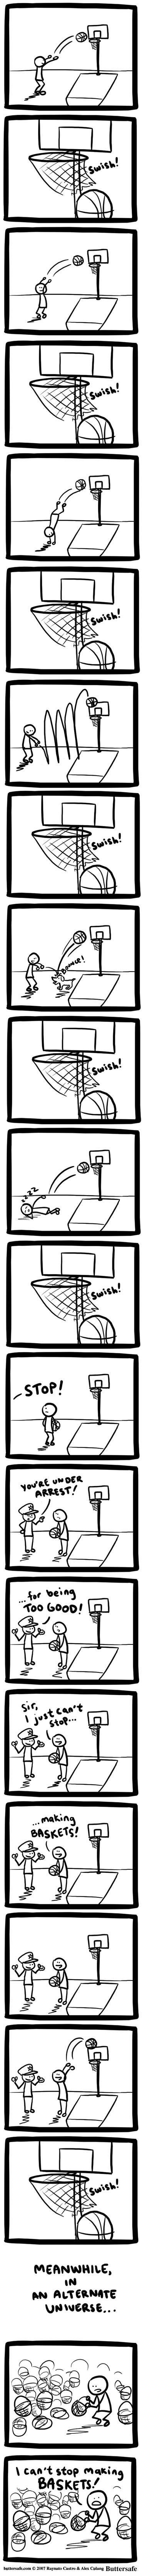 2007-09-04-makingbaskets.jpg